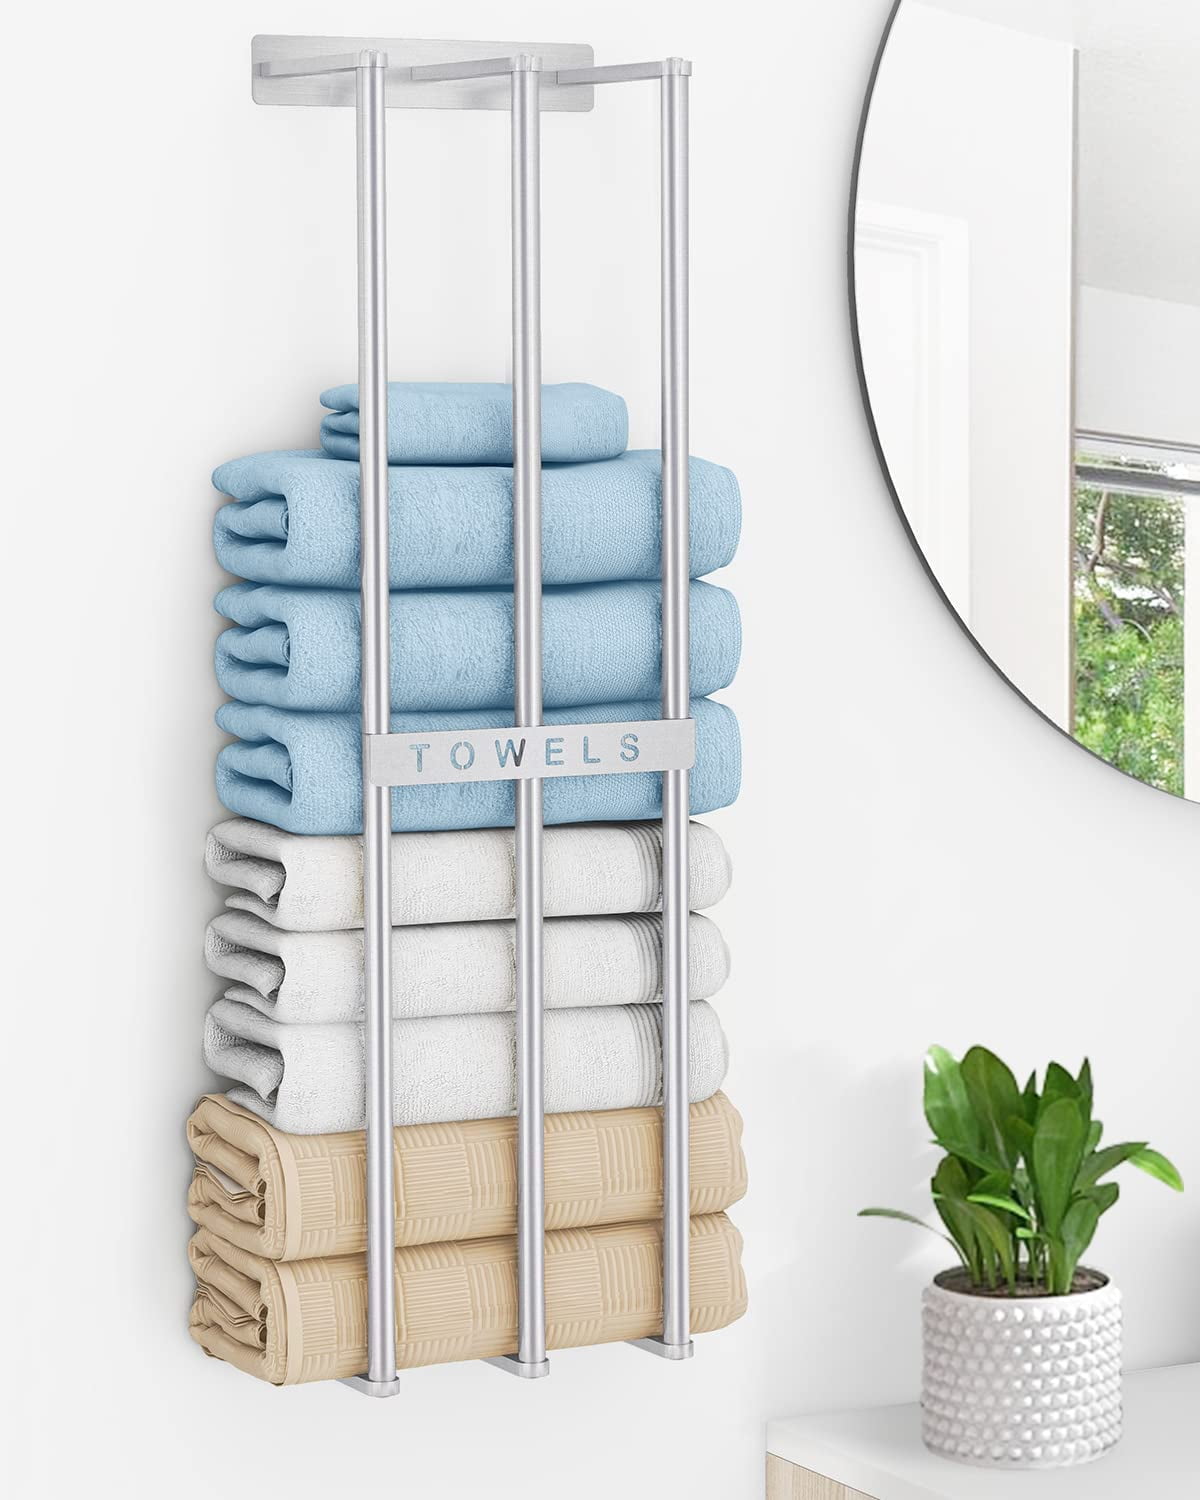 Simpor Towel Rack Wall Mounted for Bathroom, New Upgraded 3 Bar